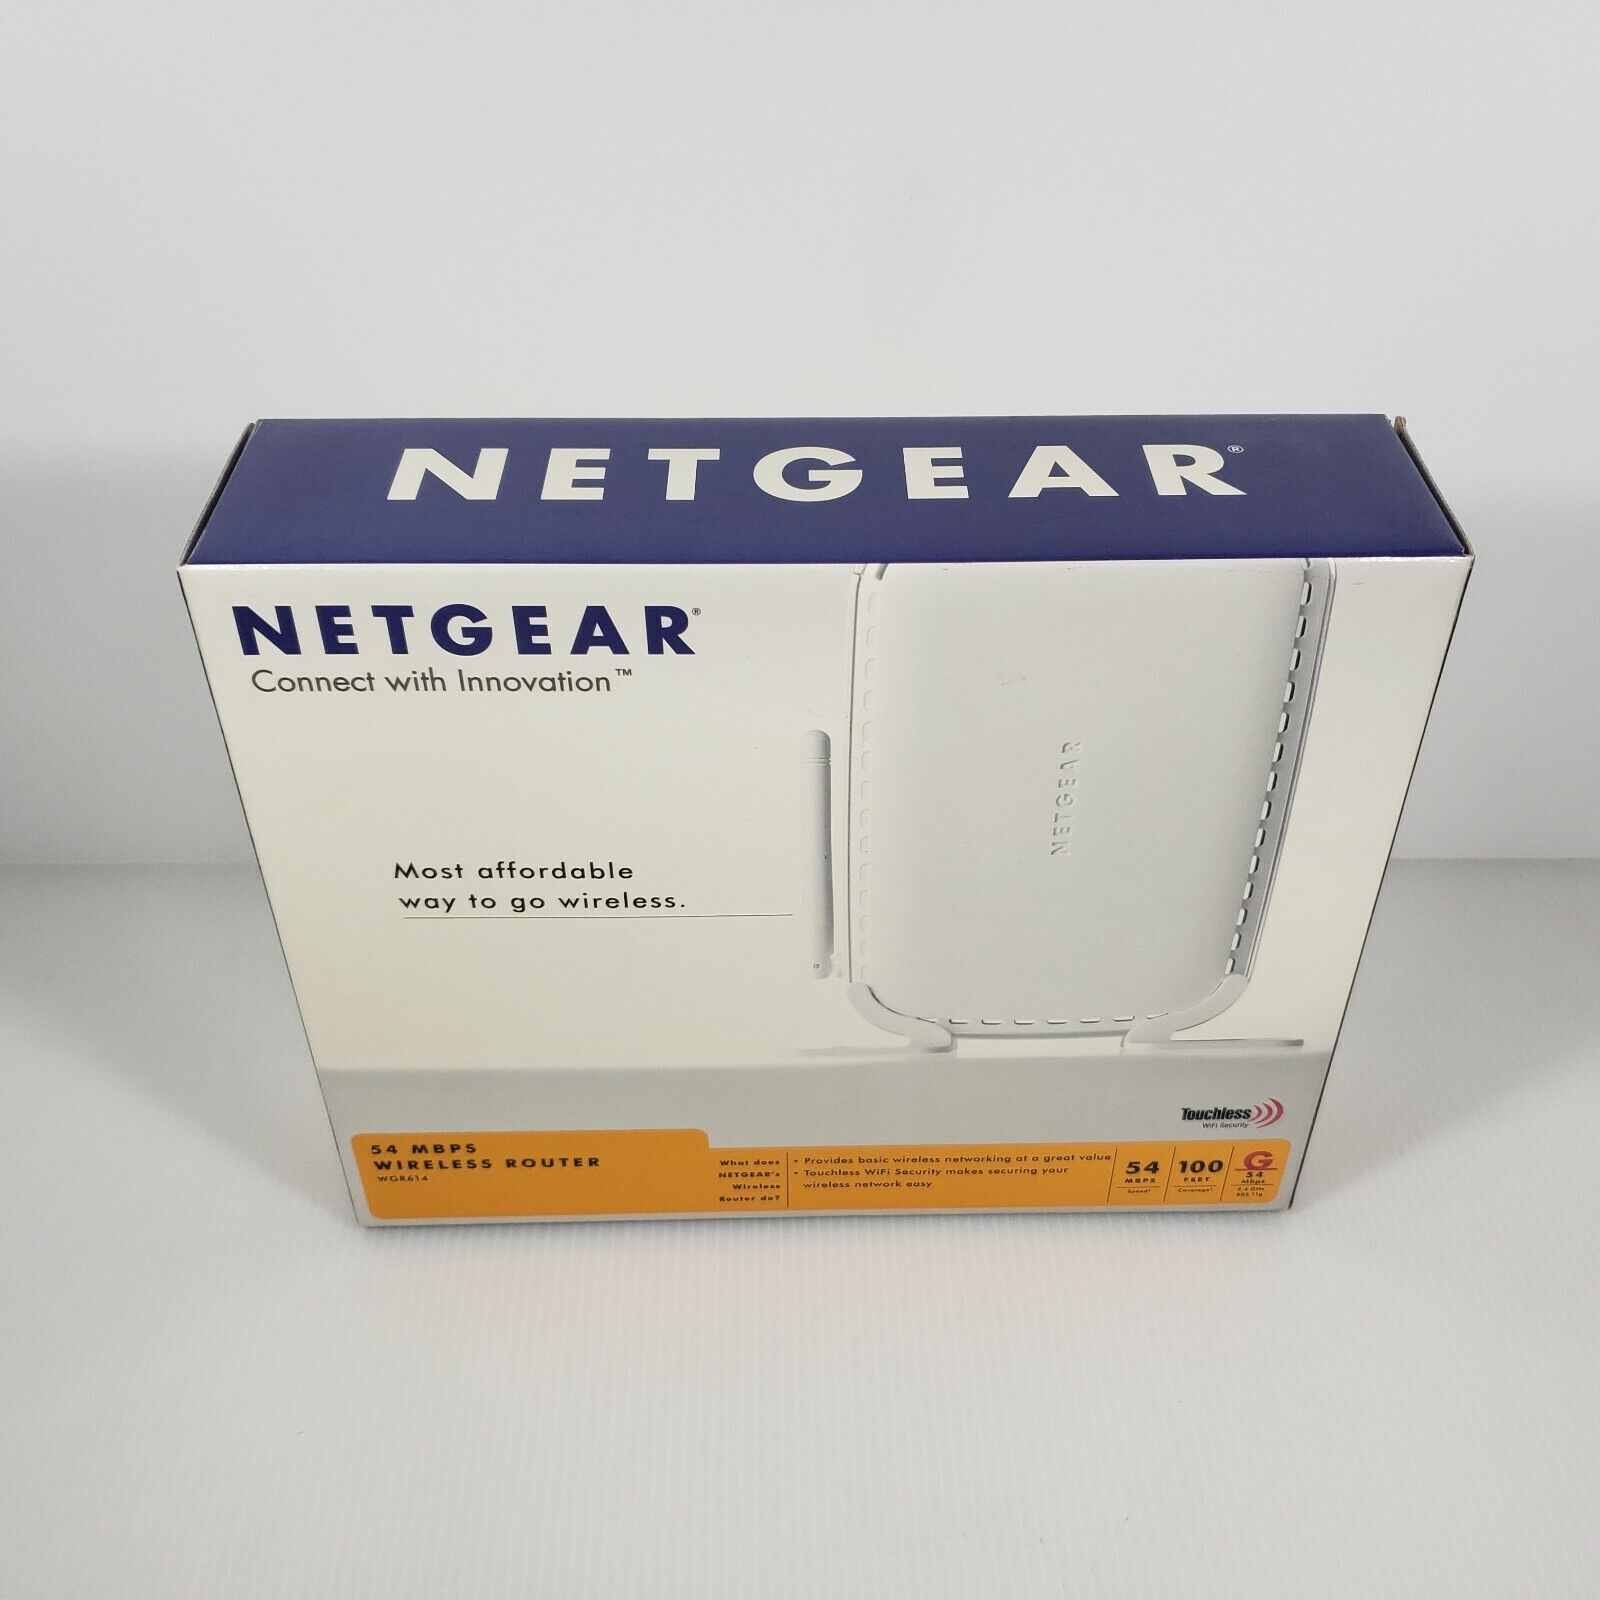 Netgear WGR614 54 Mbps 4-Port 10/100 Wireless G Router 